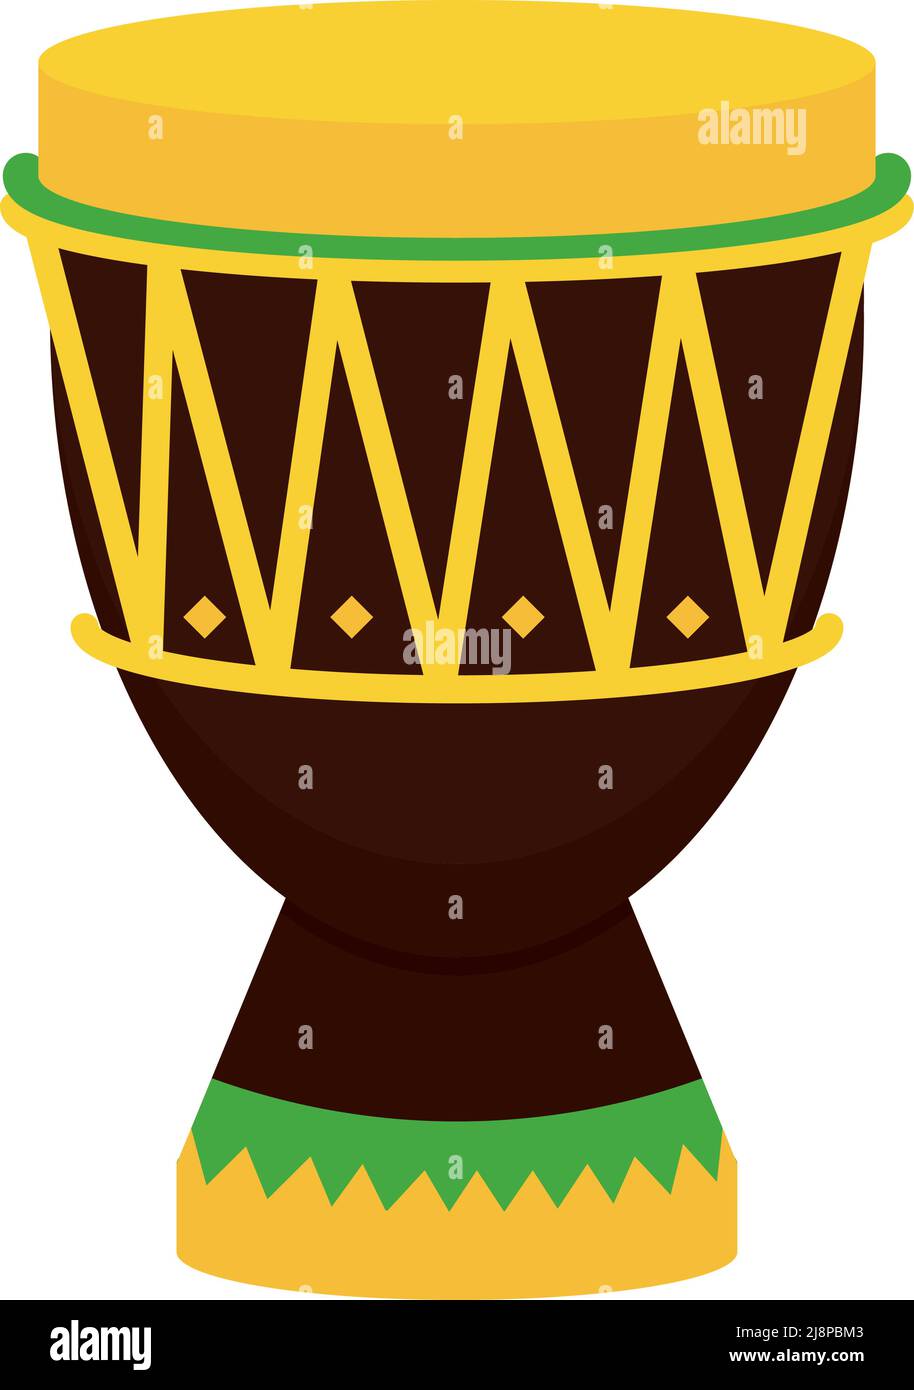 Instrument tambour africain Image Vectorielle Stock - Alamy